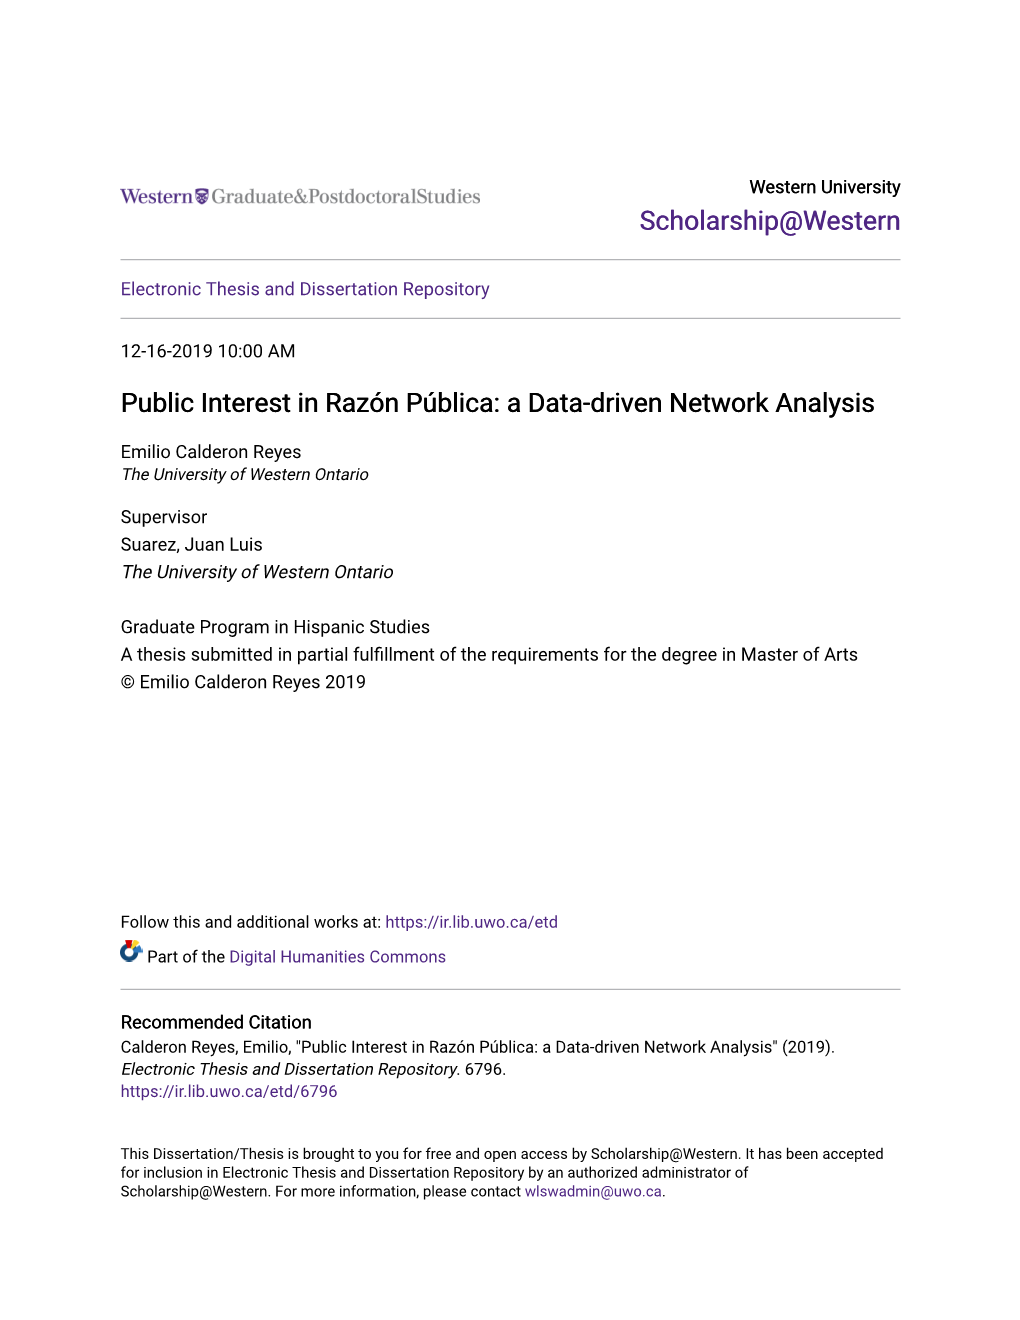 Public Interest in Razón Pública: a Data-Driven Network Analysis